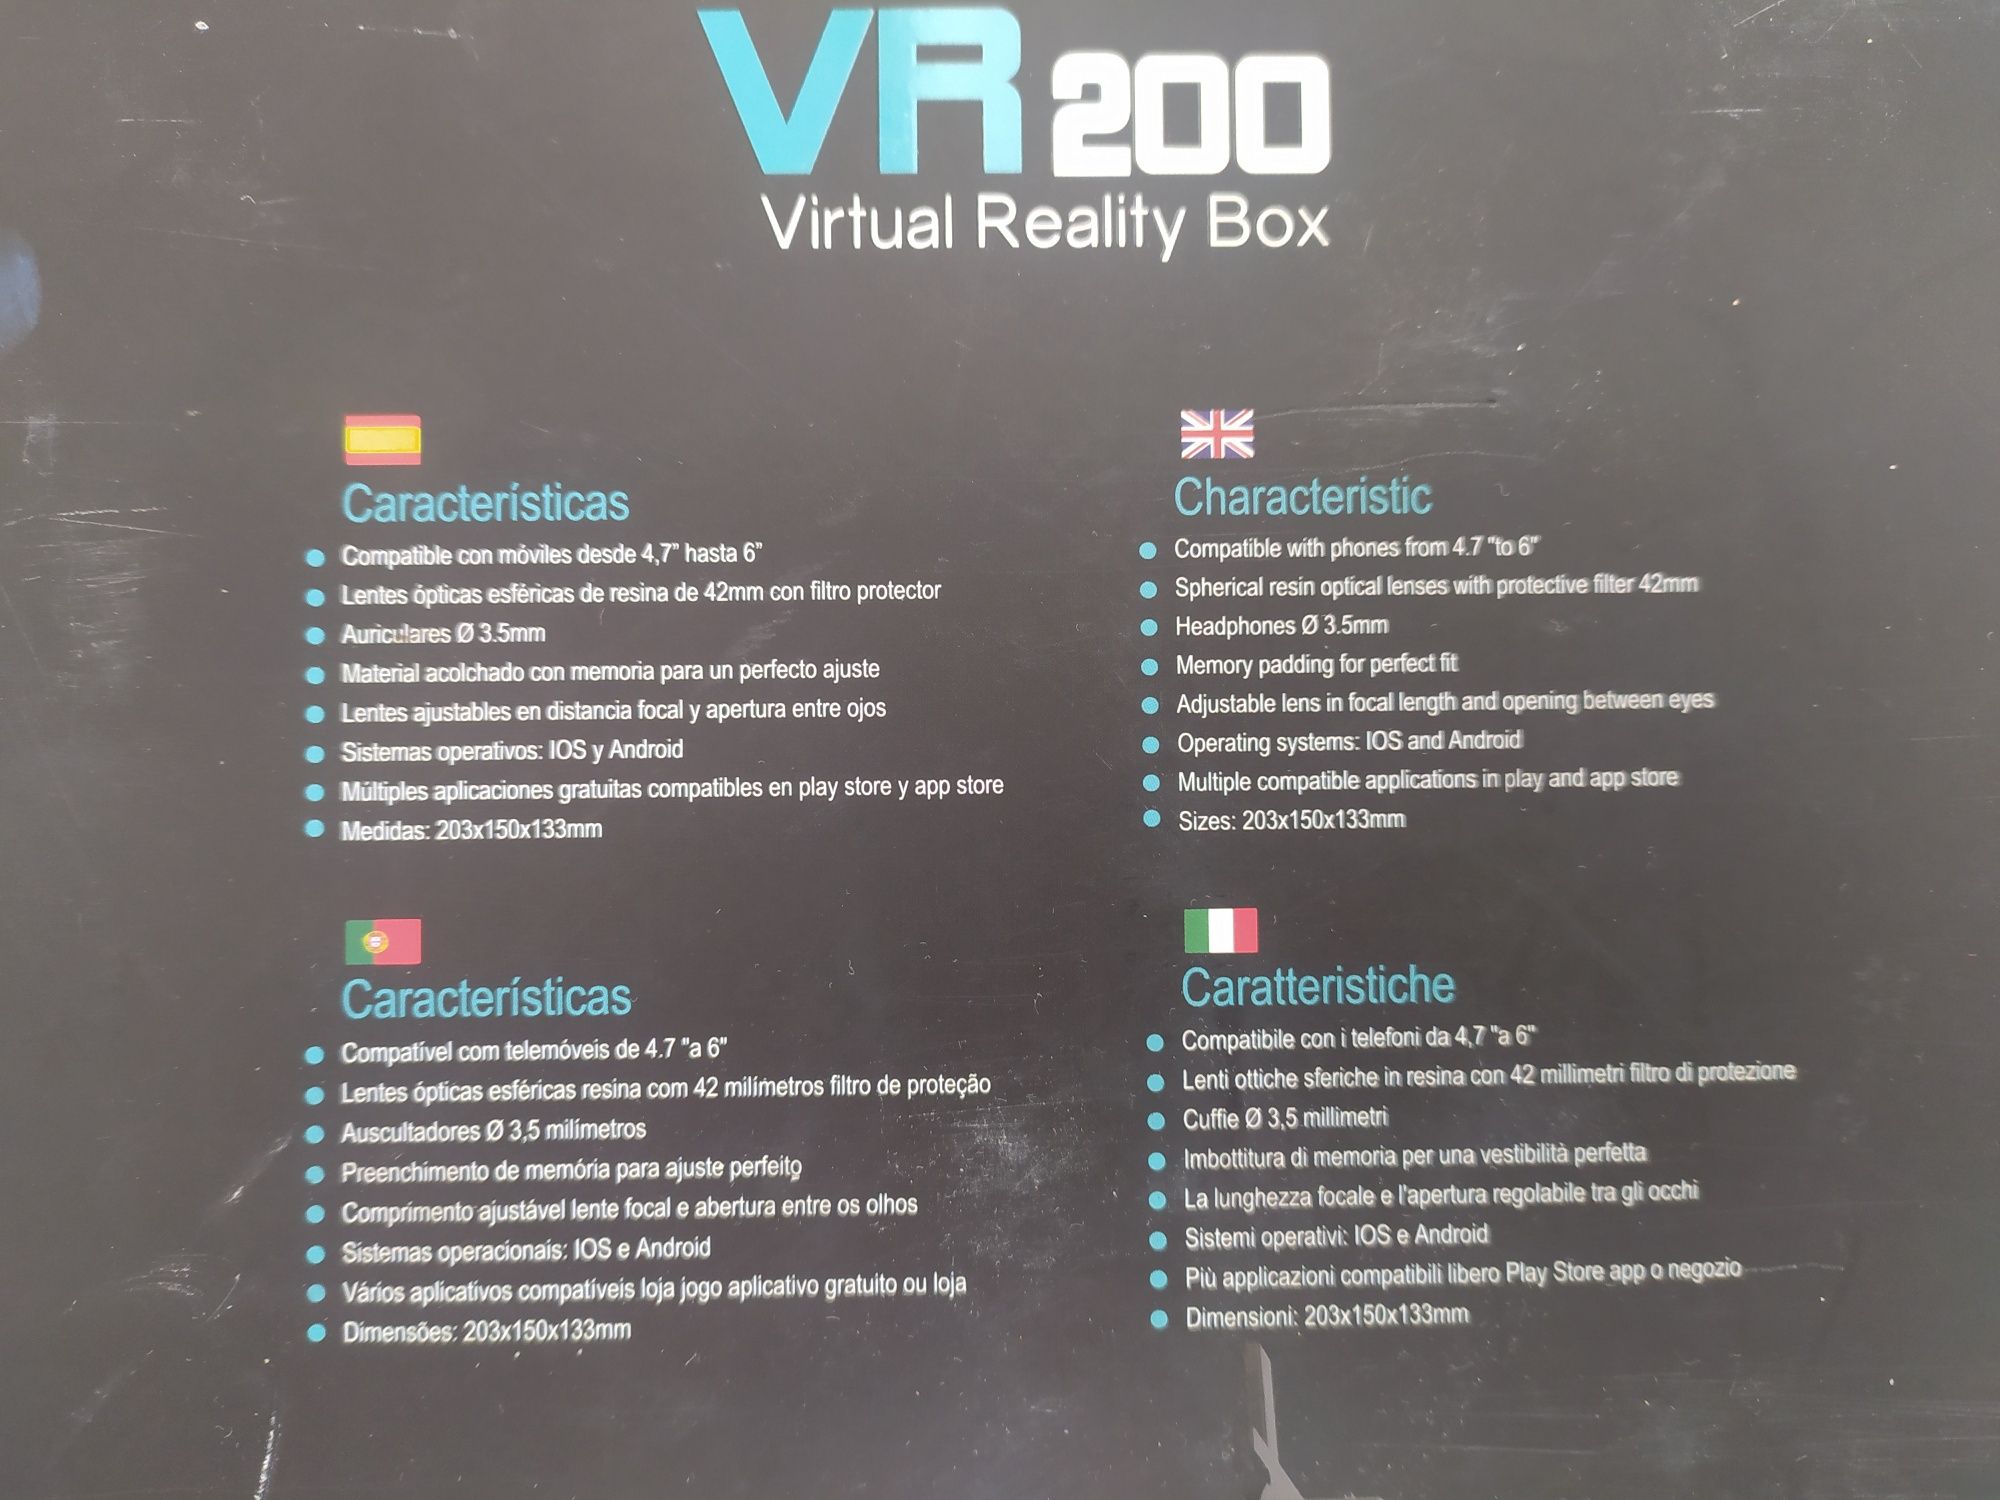 vr 200 virtual reality box